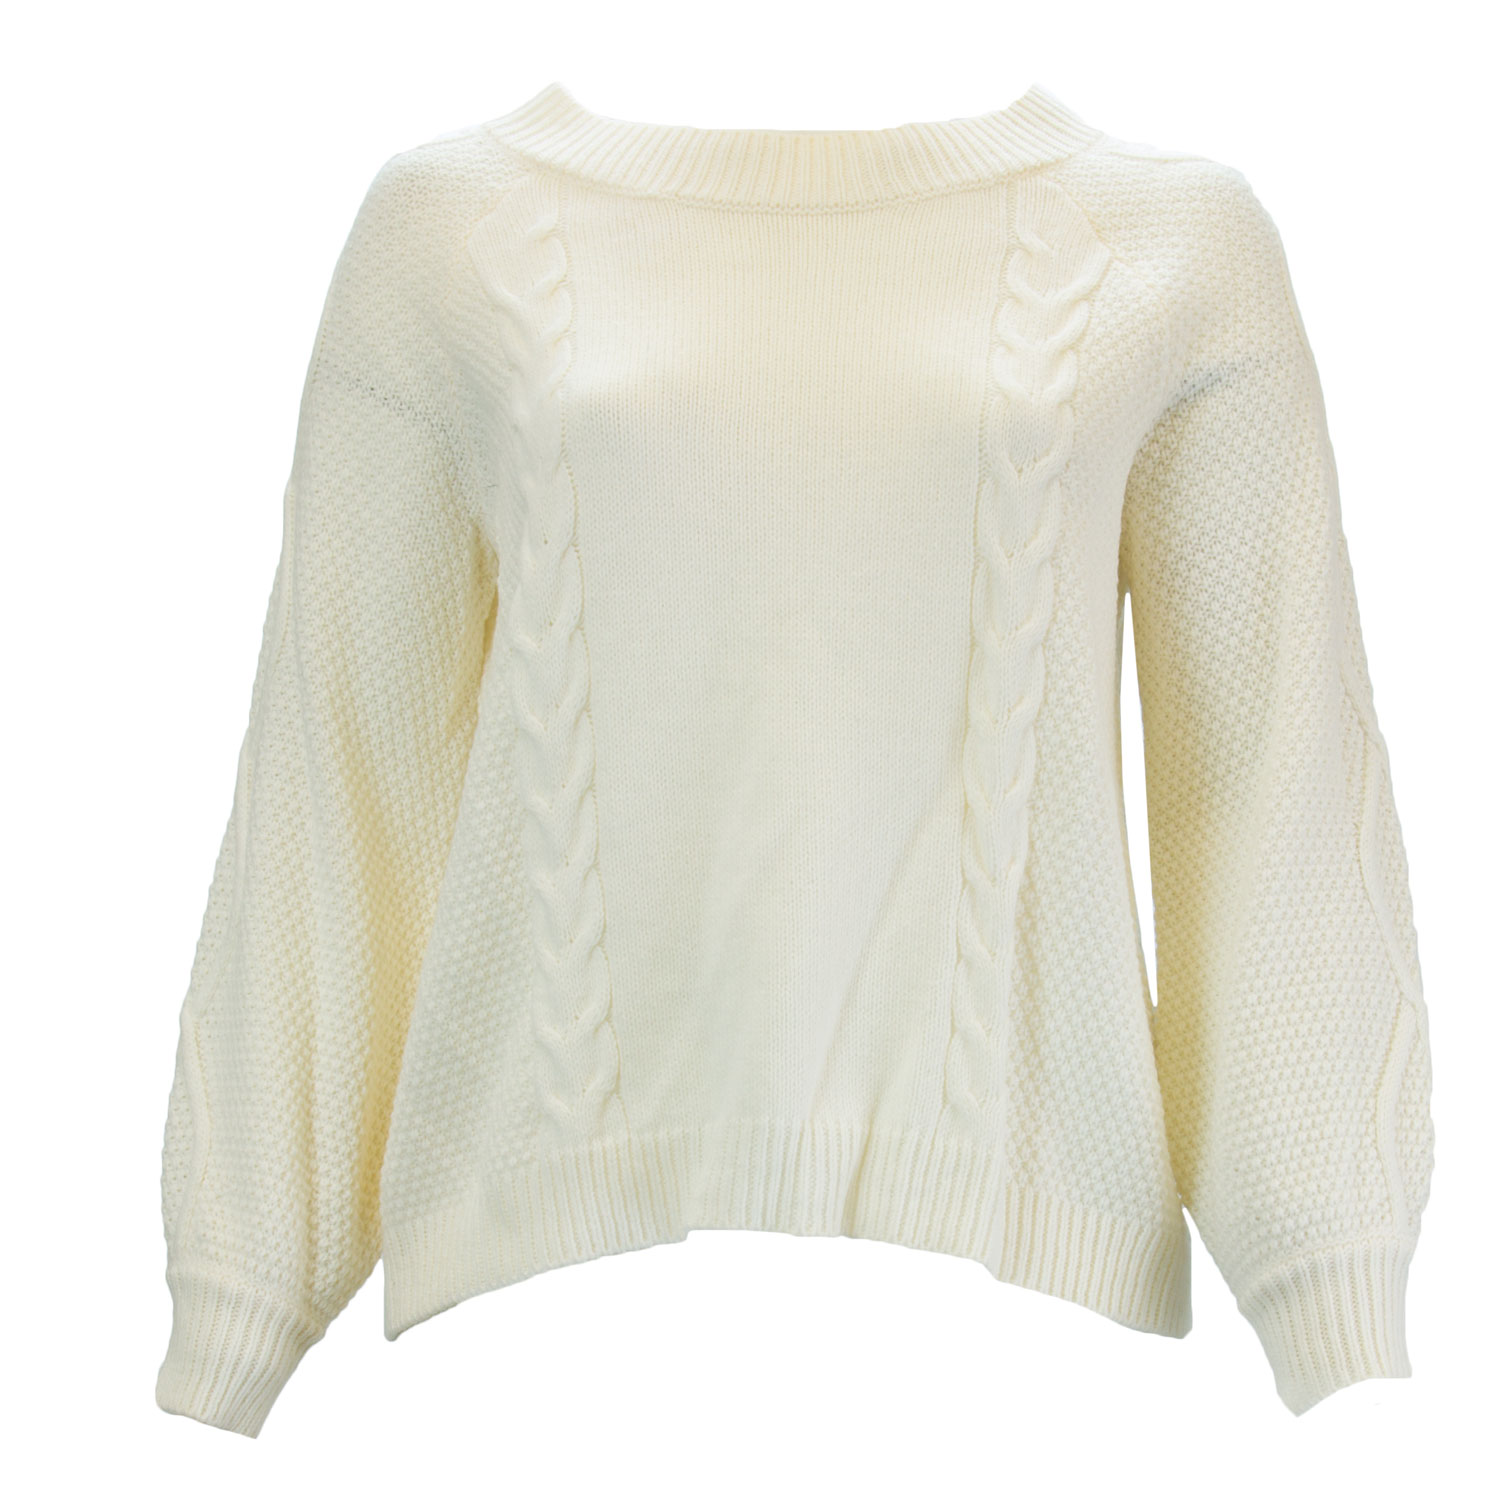 MARINA RINALDI Women's White Agile Cable Knit Sweater Medium $325 NWT ...